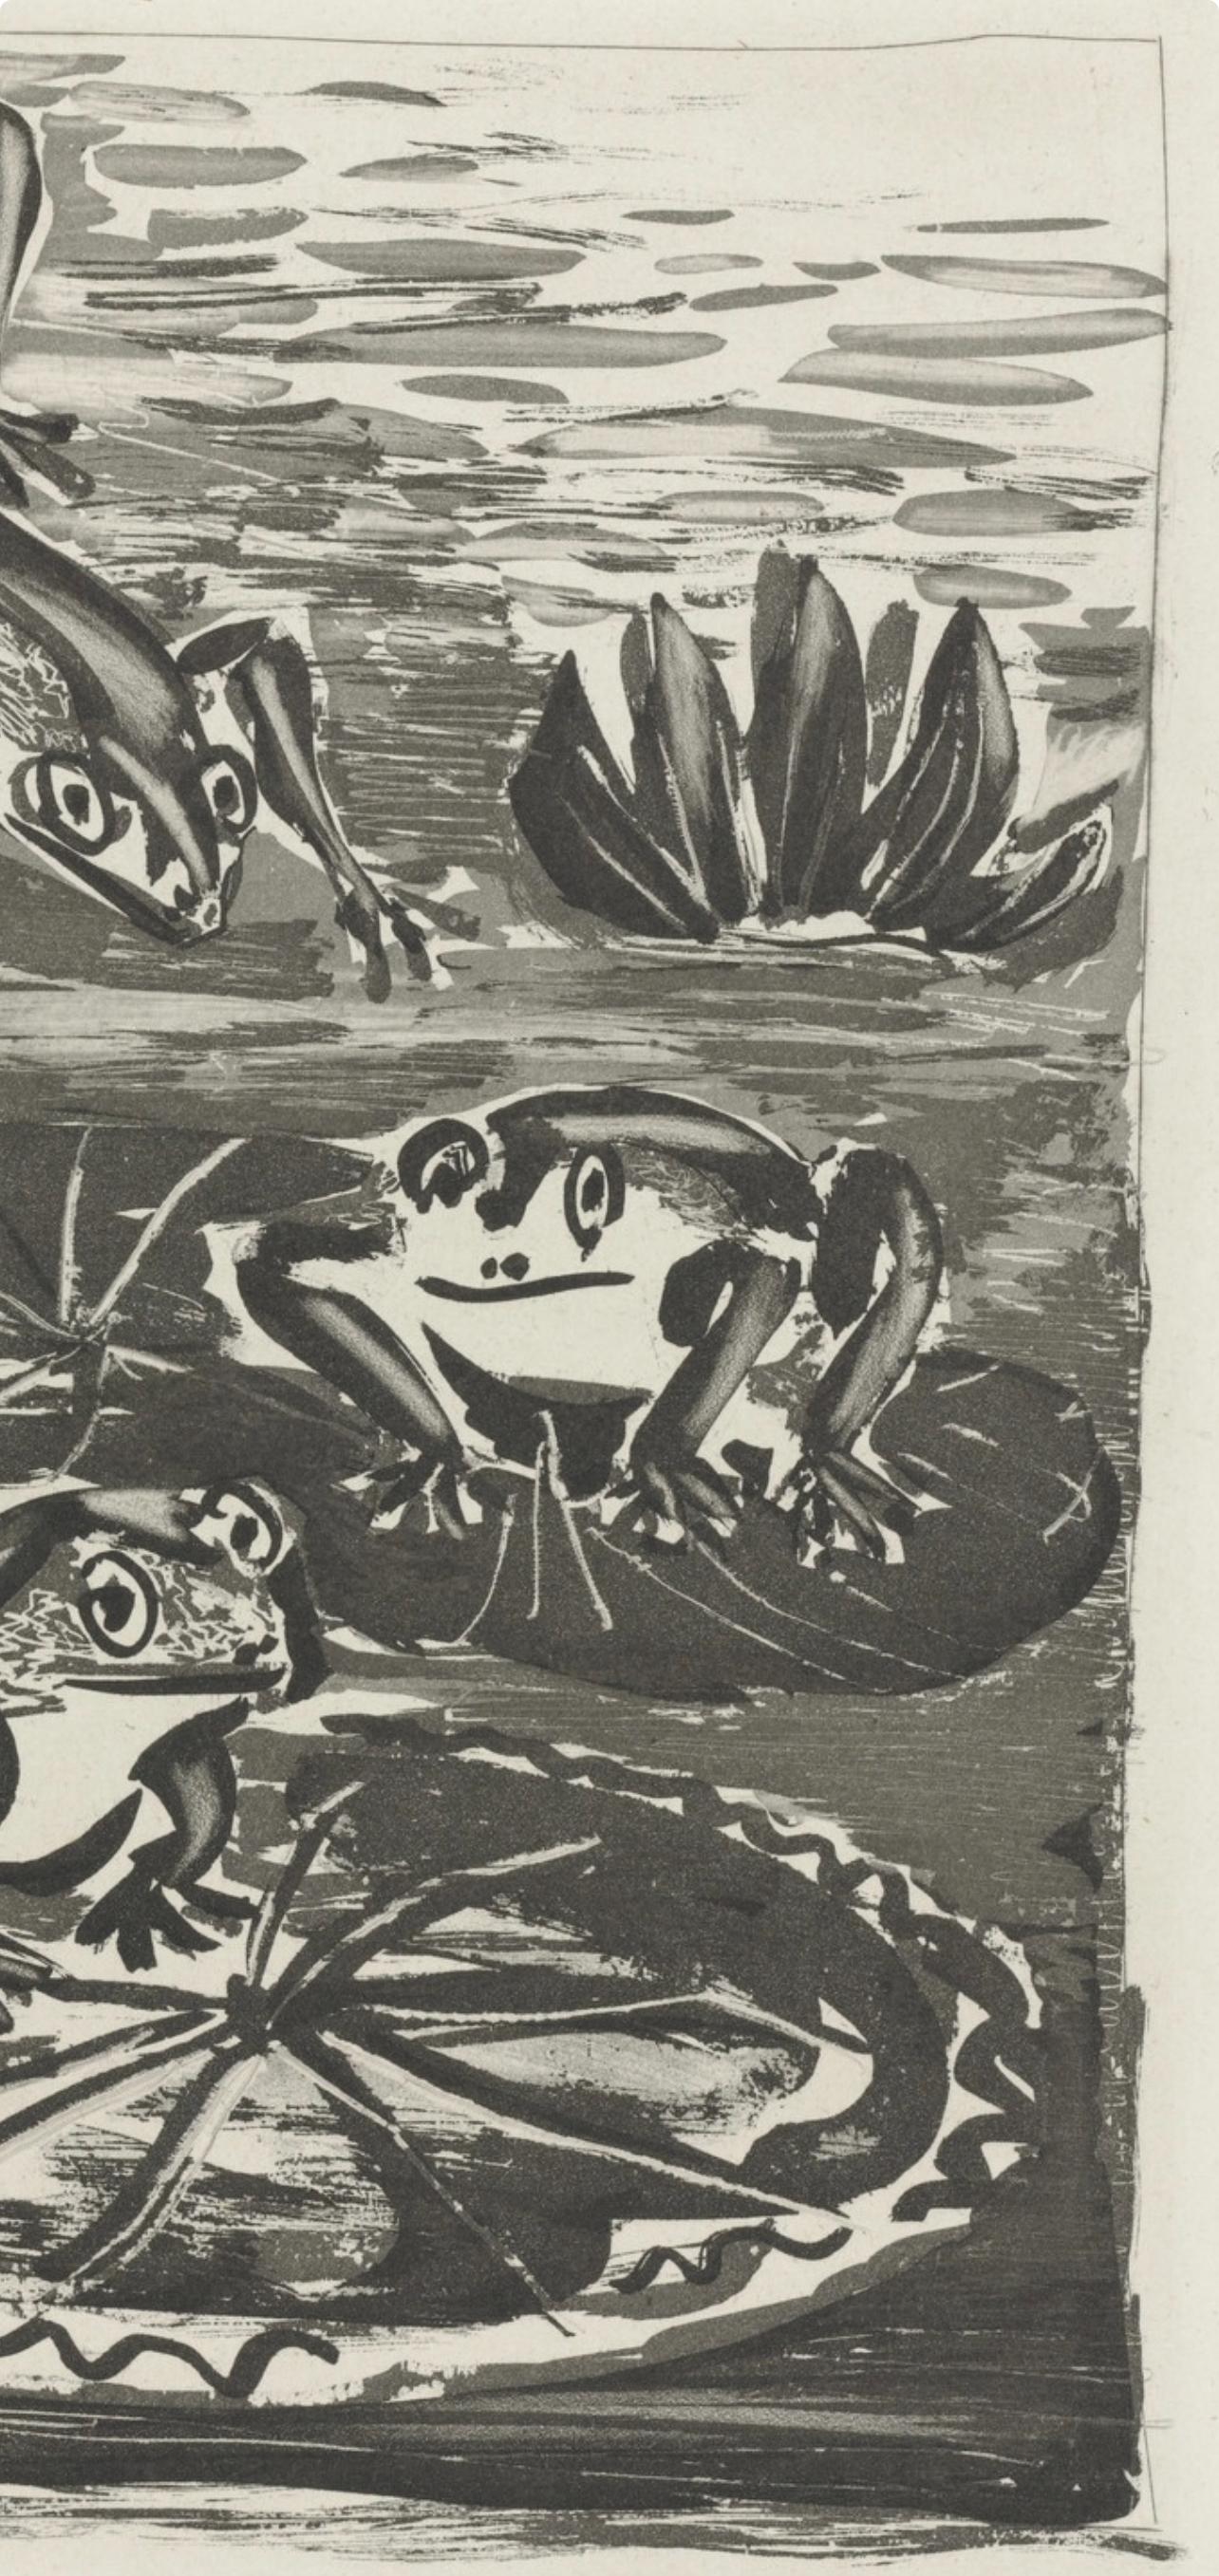 Picasso, La Grenouille, Histoire naturelle (after) - Print by Pablo Picasso